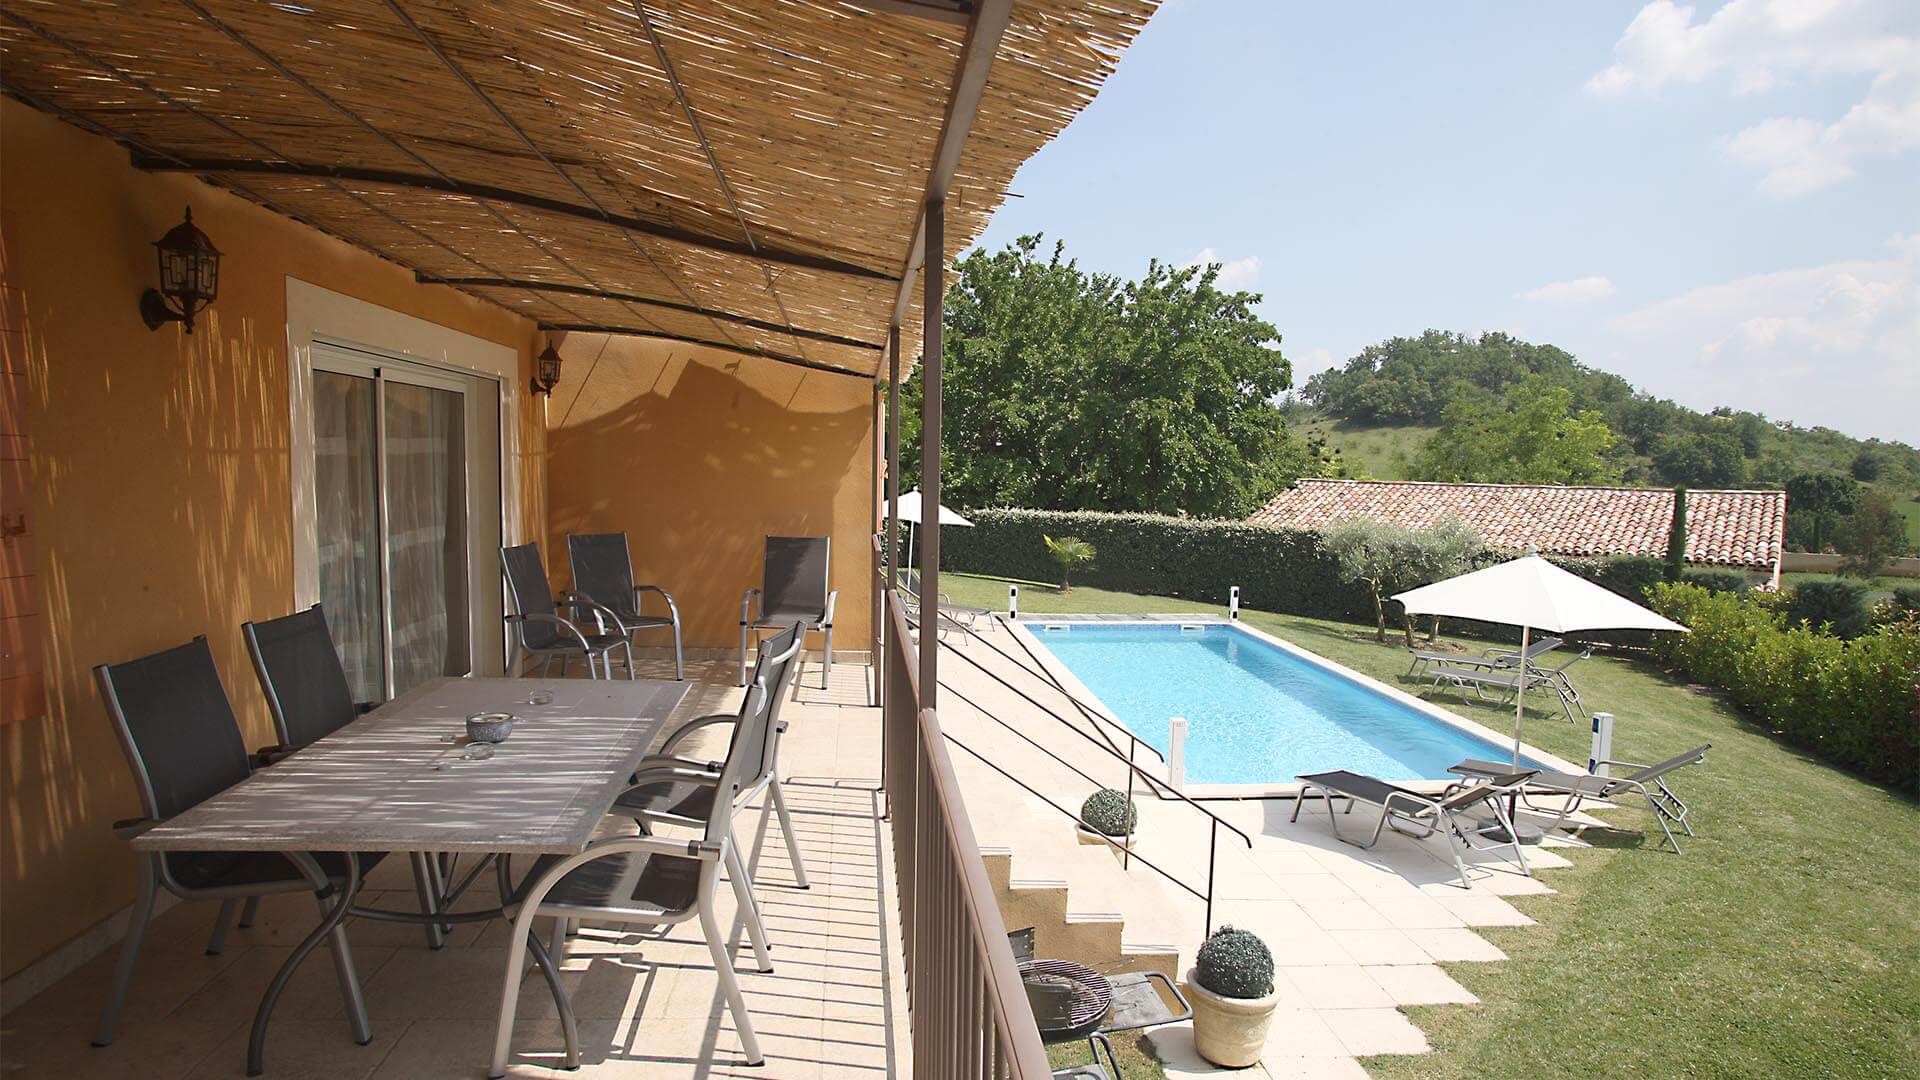 Location villa de vacances Provence | Villa les oliviers | Terrasse, piscine et jardin